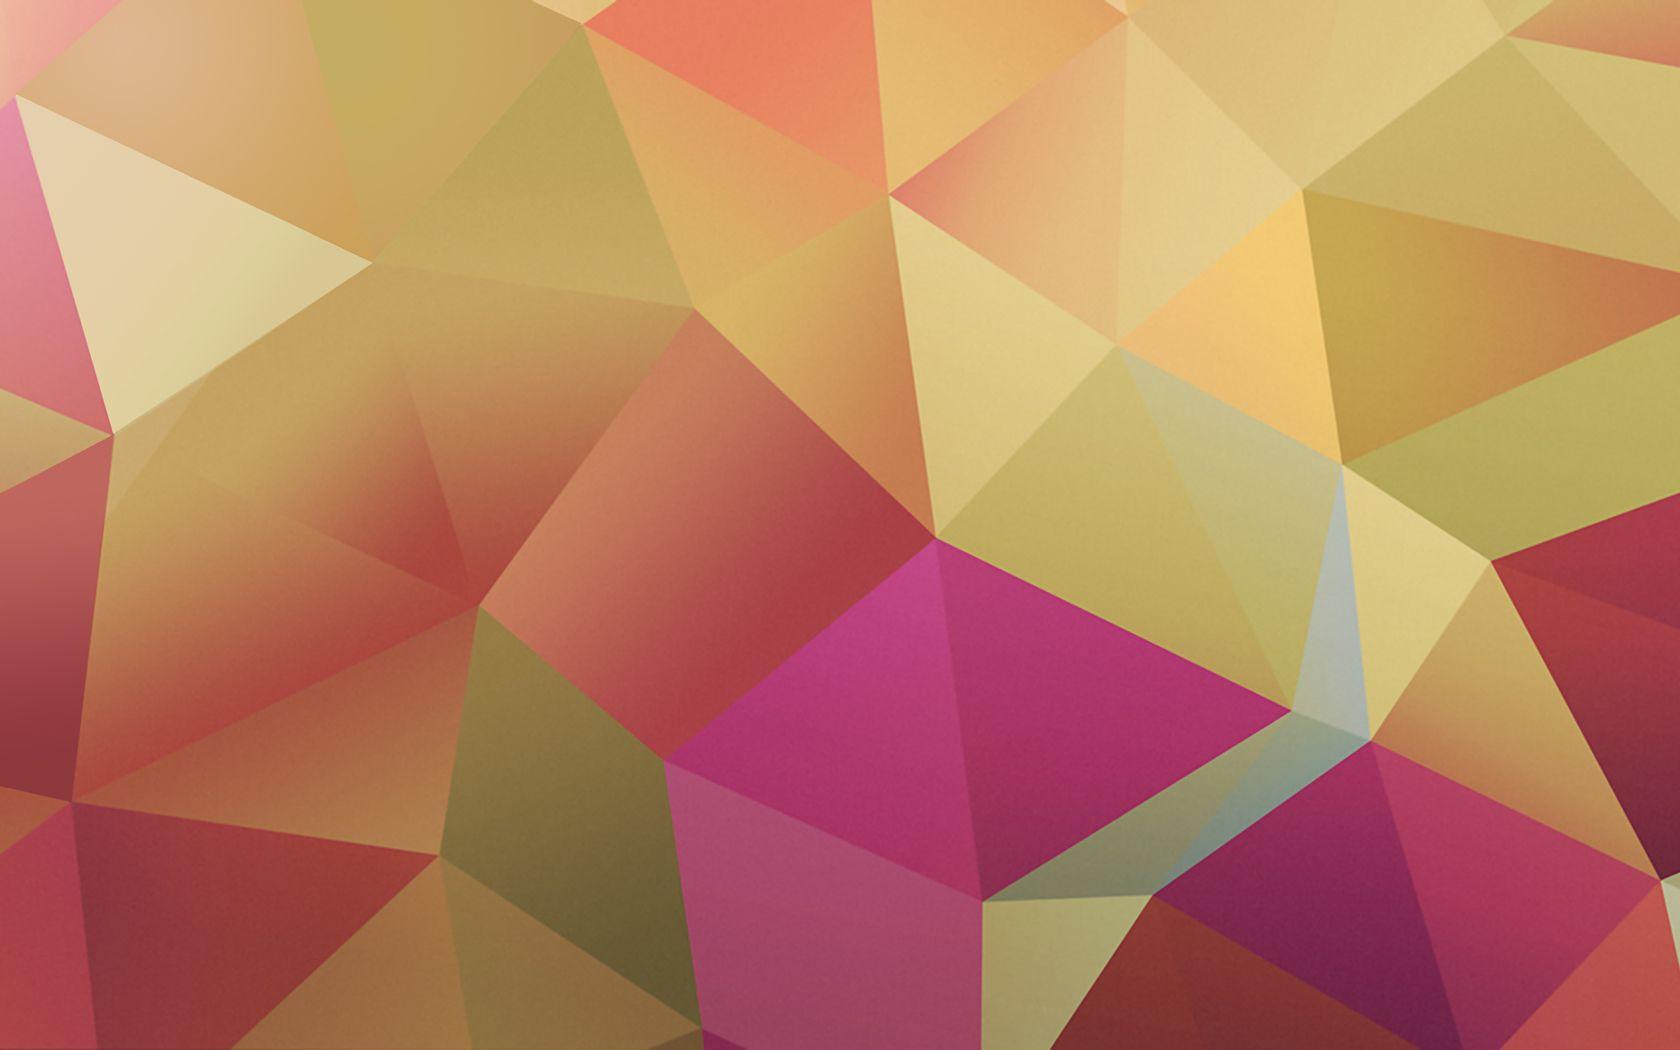 terralonginqua: Nexus 7 Jelly Bean Android Abstract wallpaper